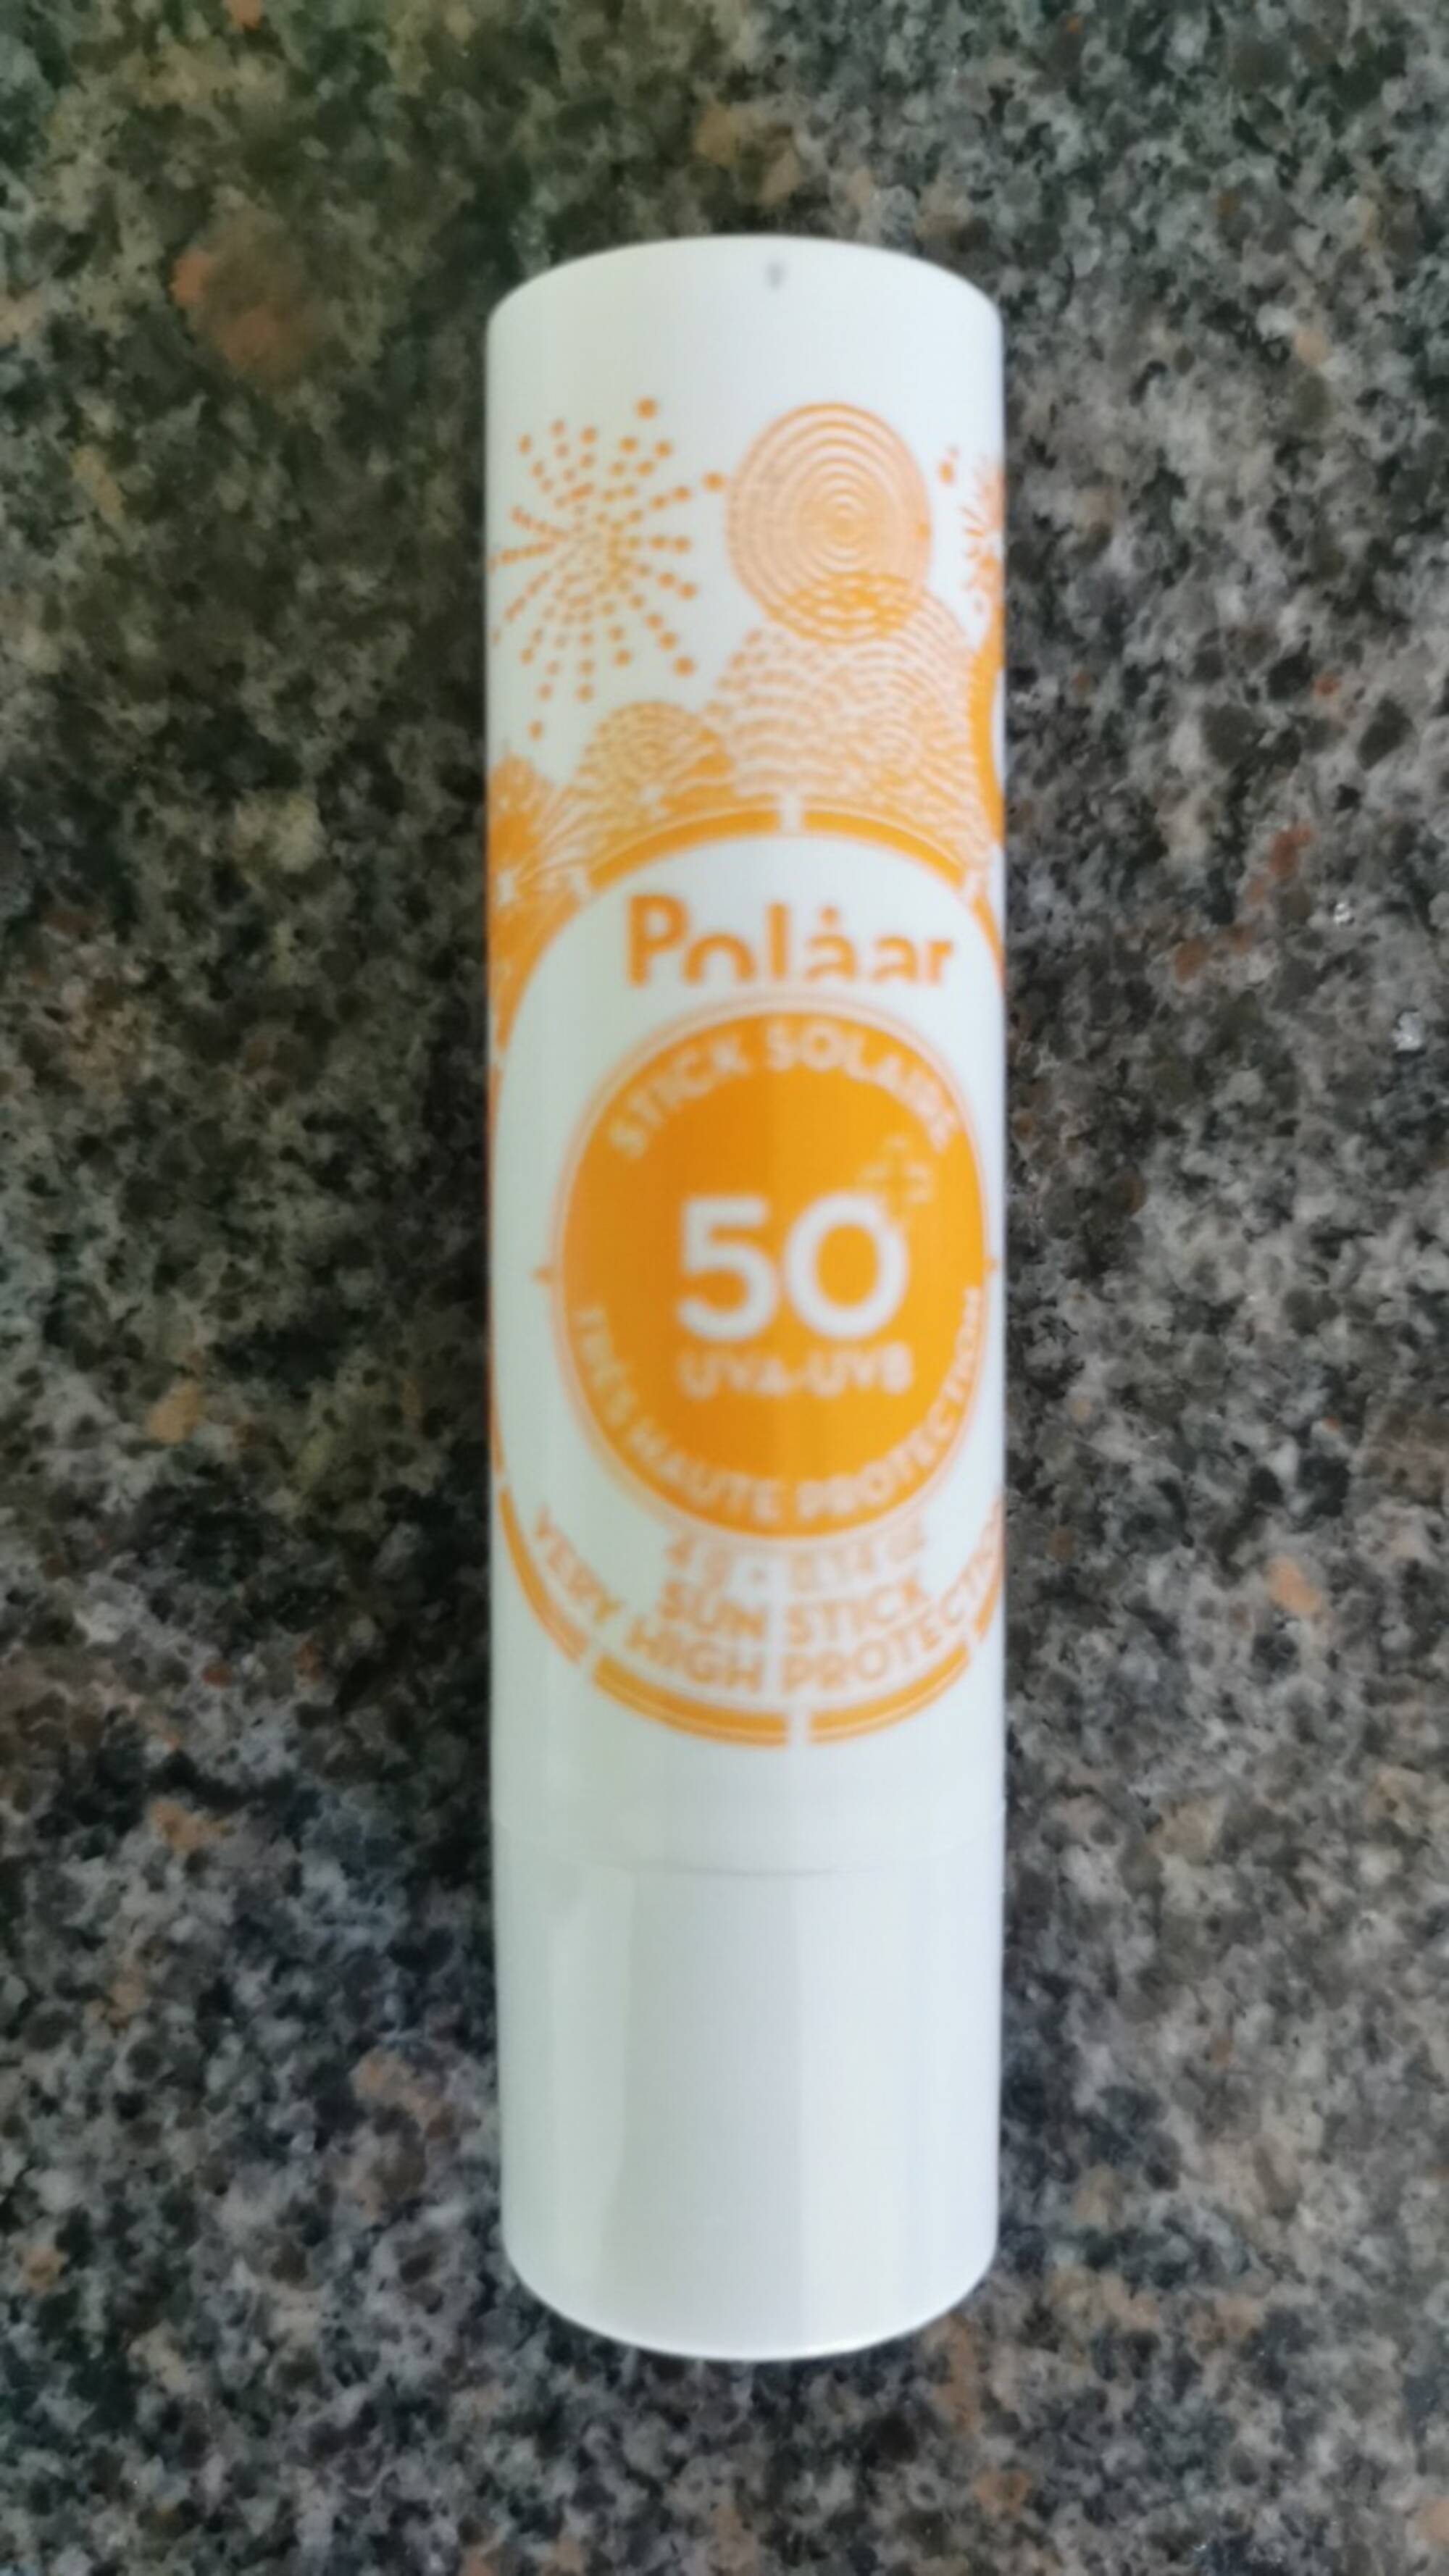 POLAAR - Stick solaire SPF 50+